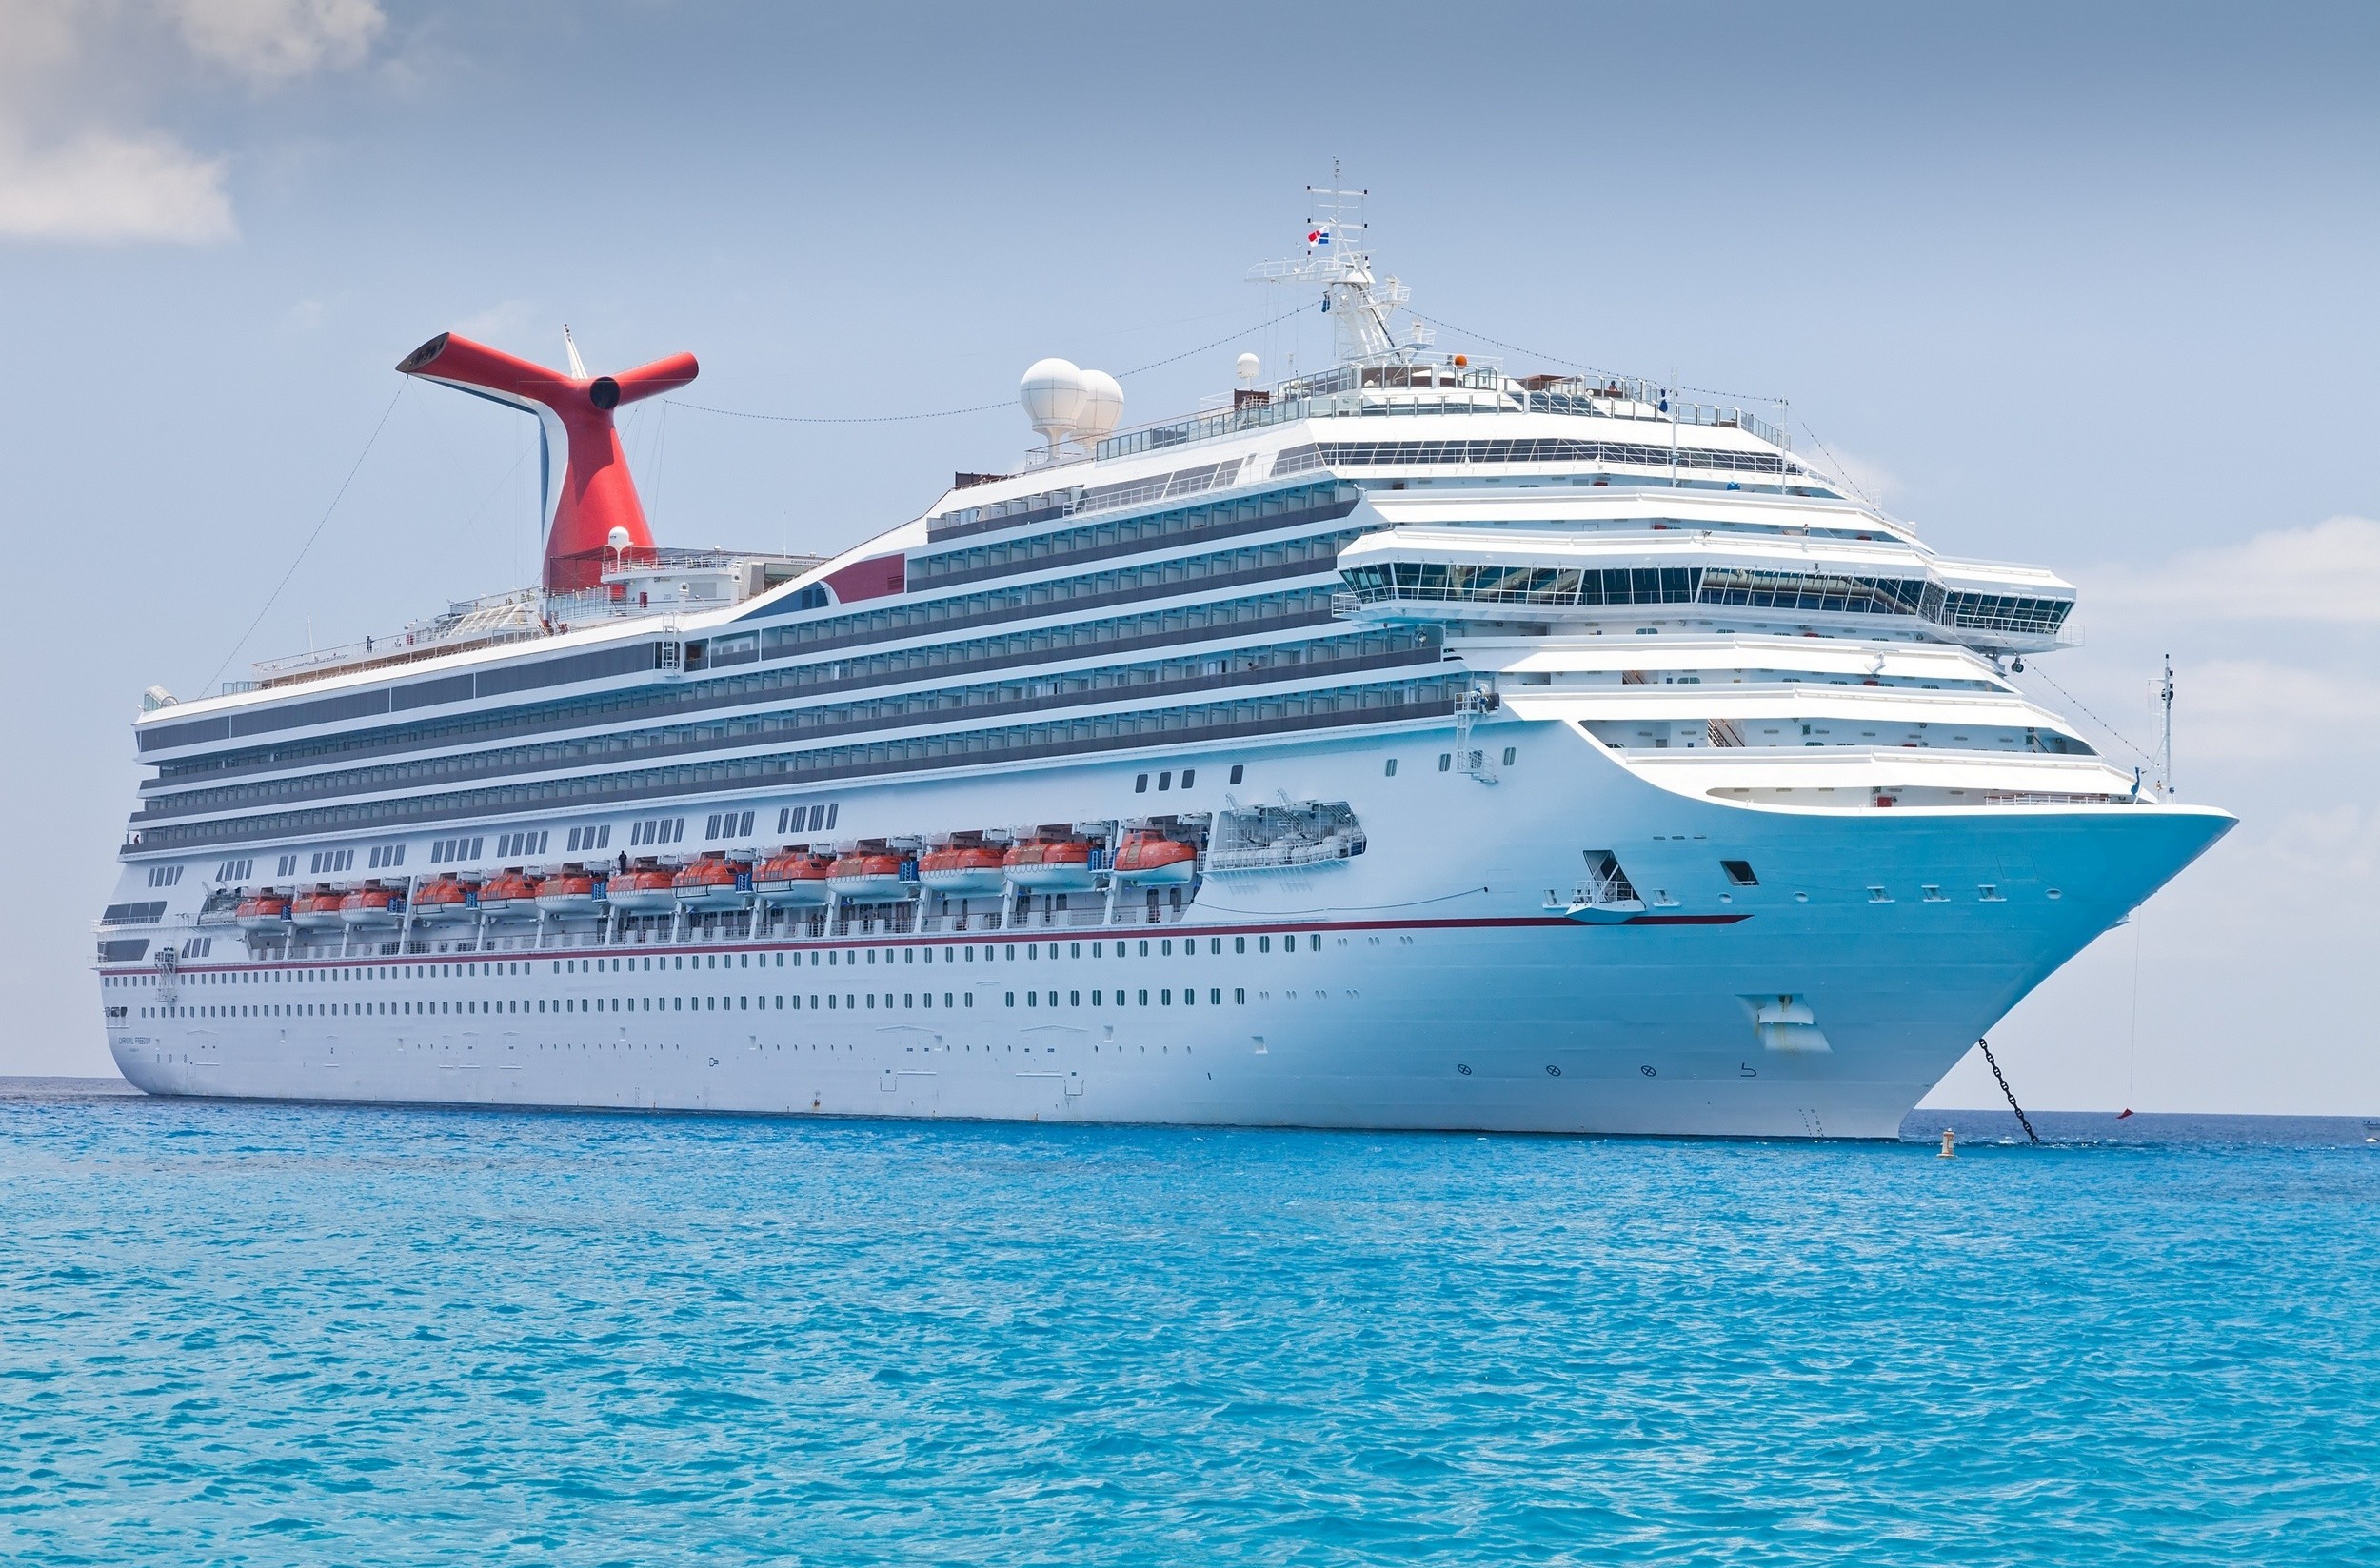 cruise wallpaper,cruise ship,vehicle,ship,water transportation,passenger ship